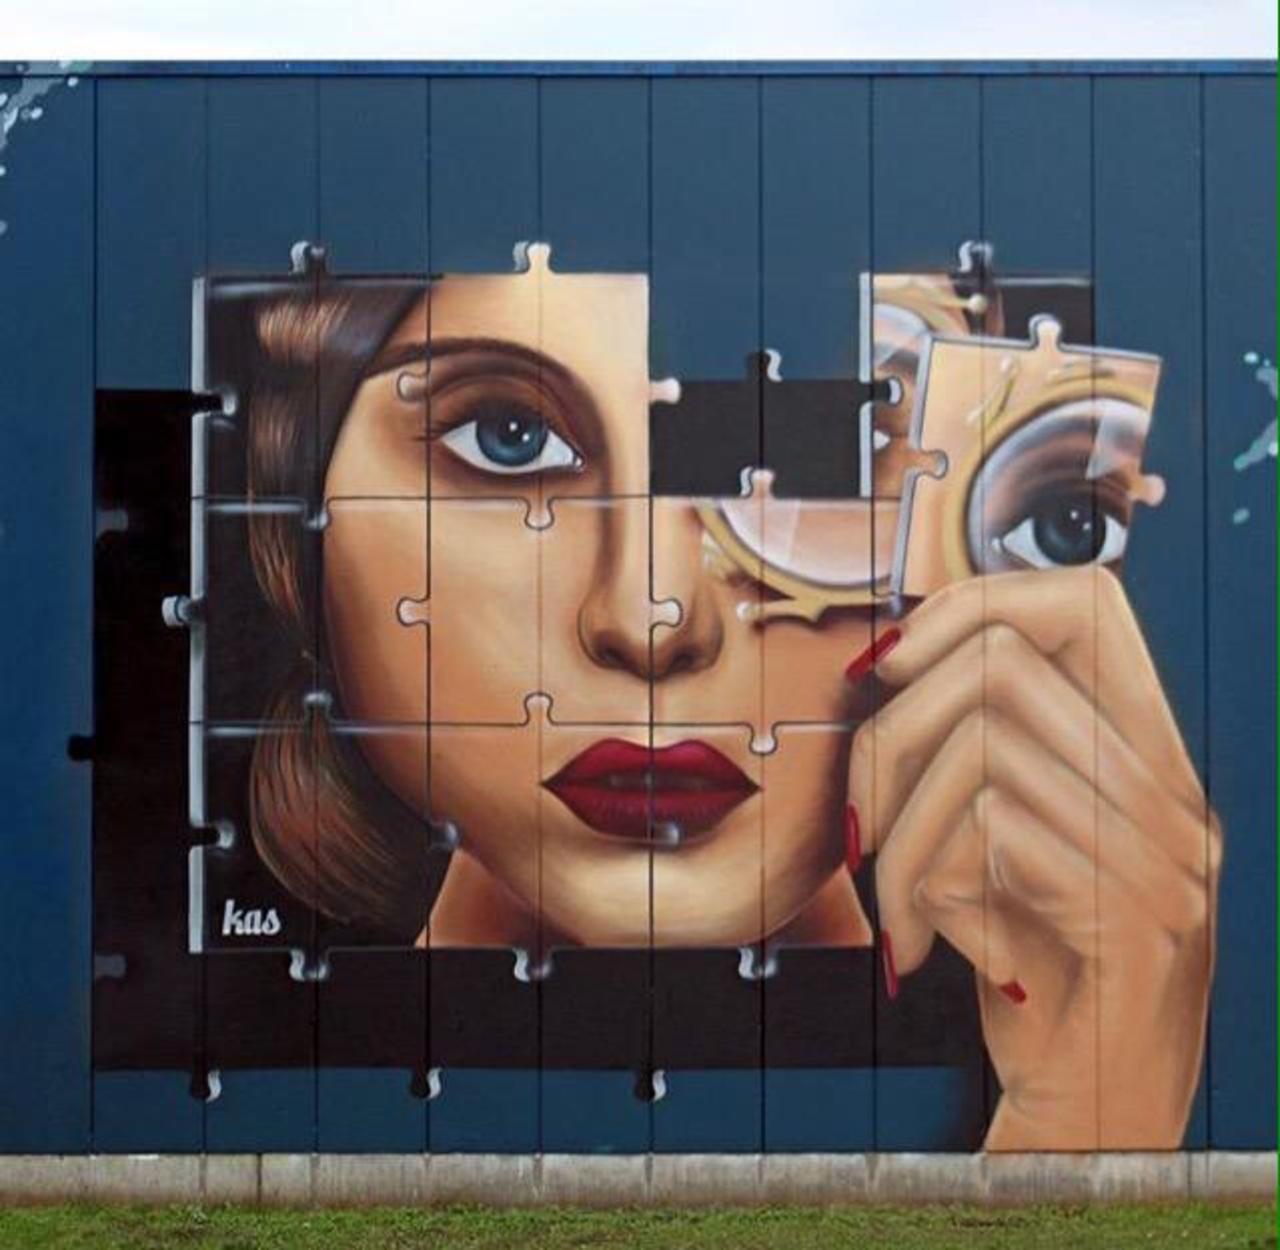 Kas Art's new Street Art "Piece of me" in Aalst Belgium 

#art #graffiti #mural #streetart http://t.co/lCFEJ0meDv